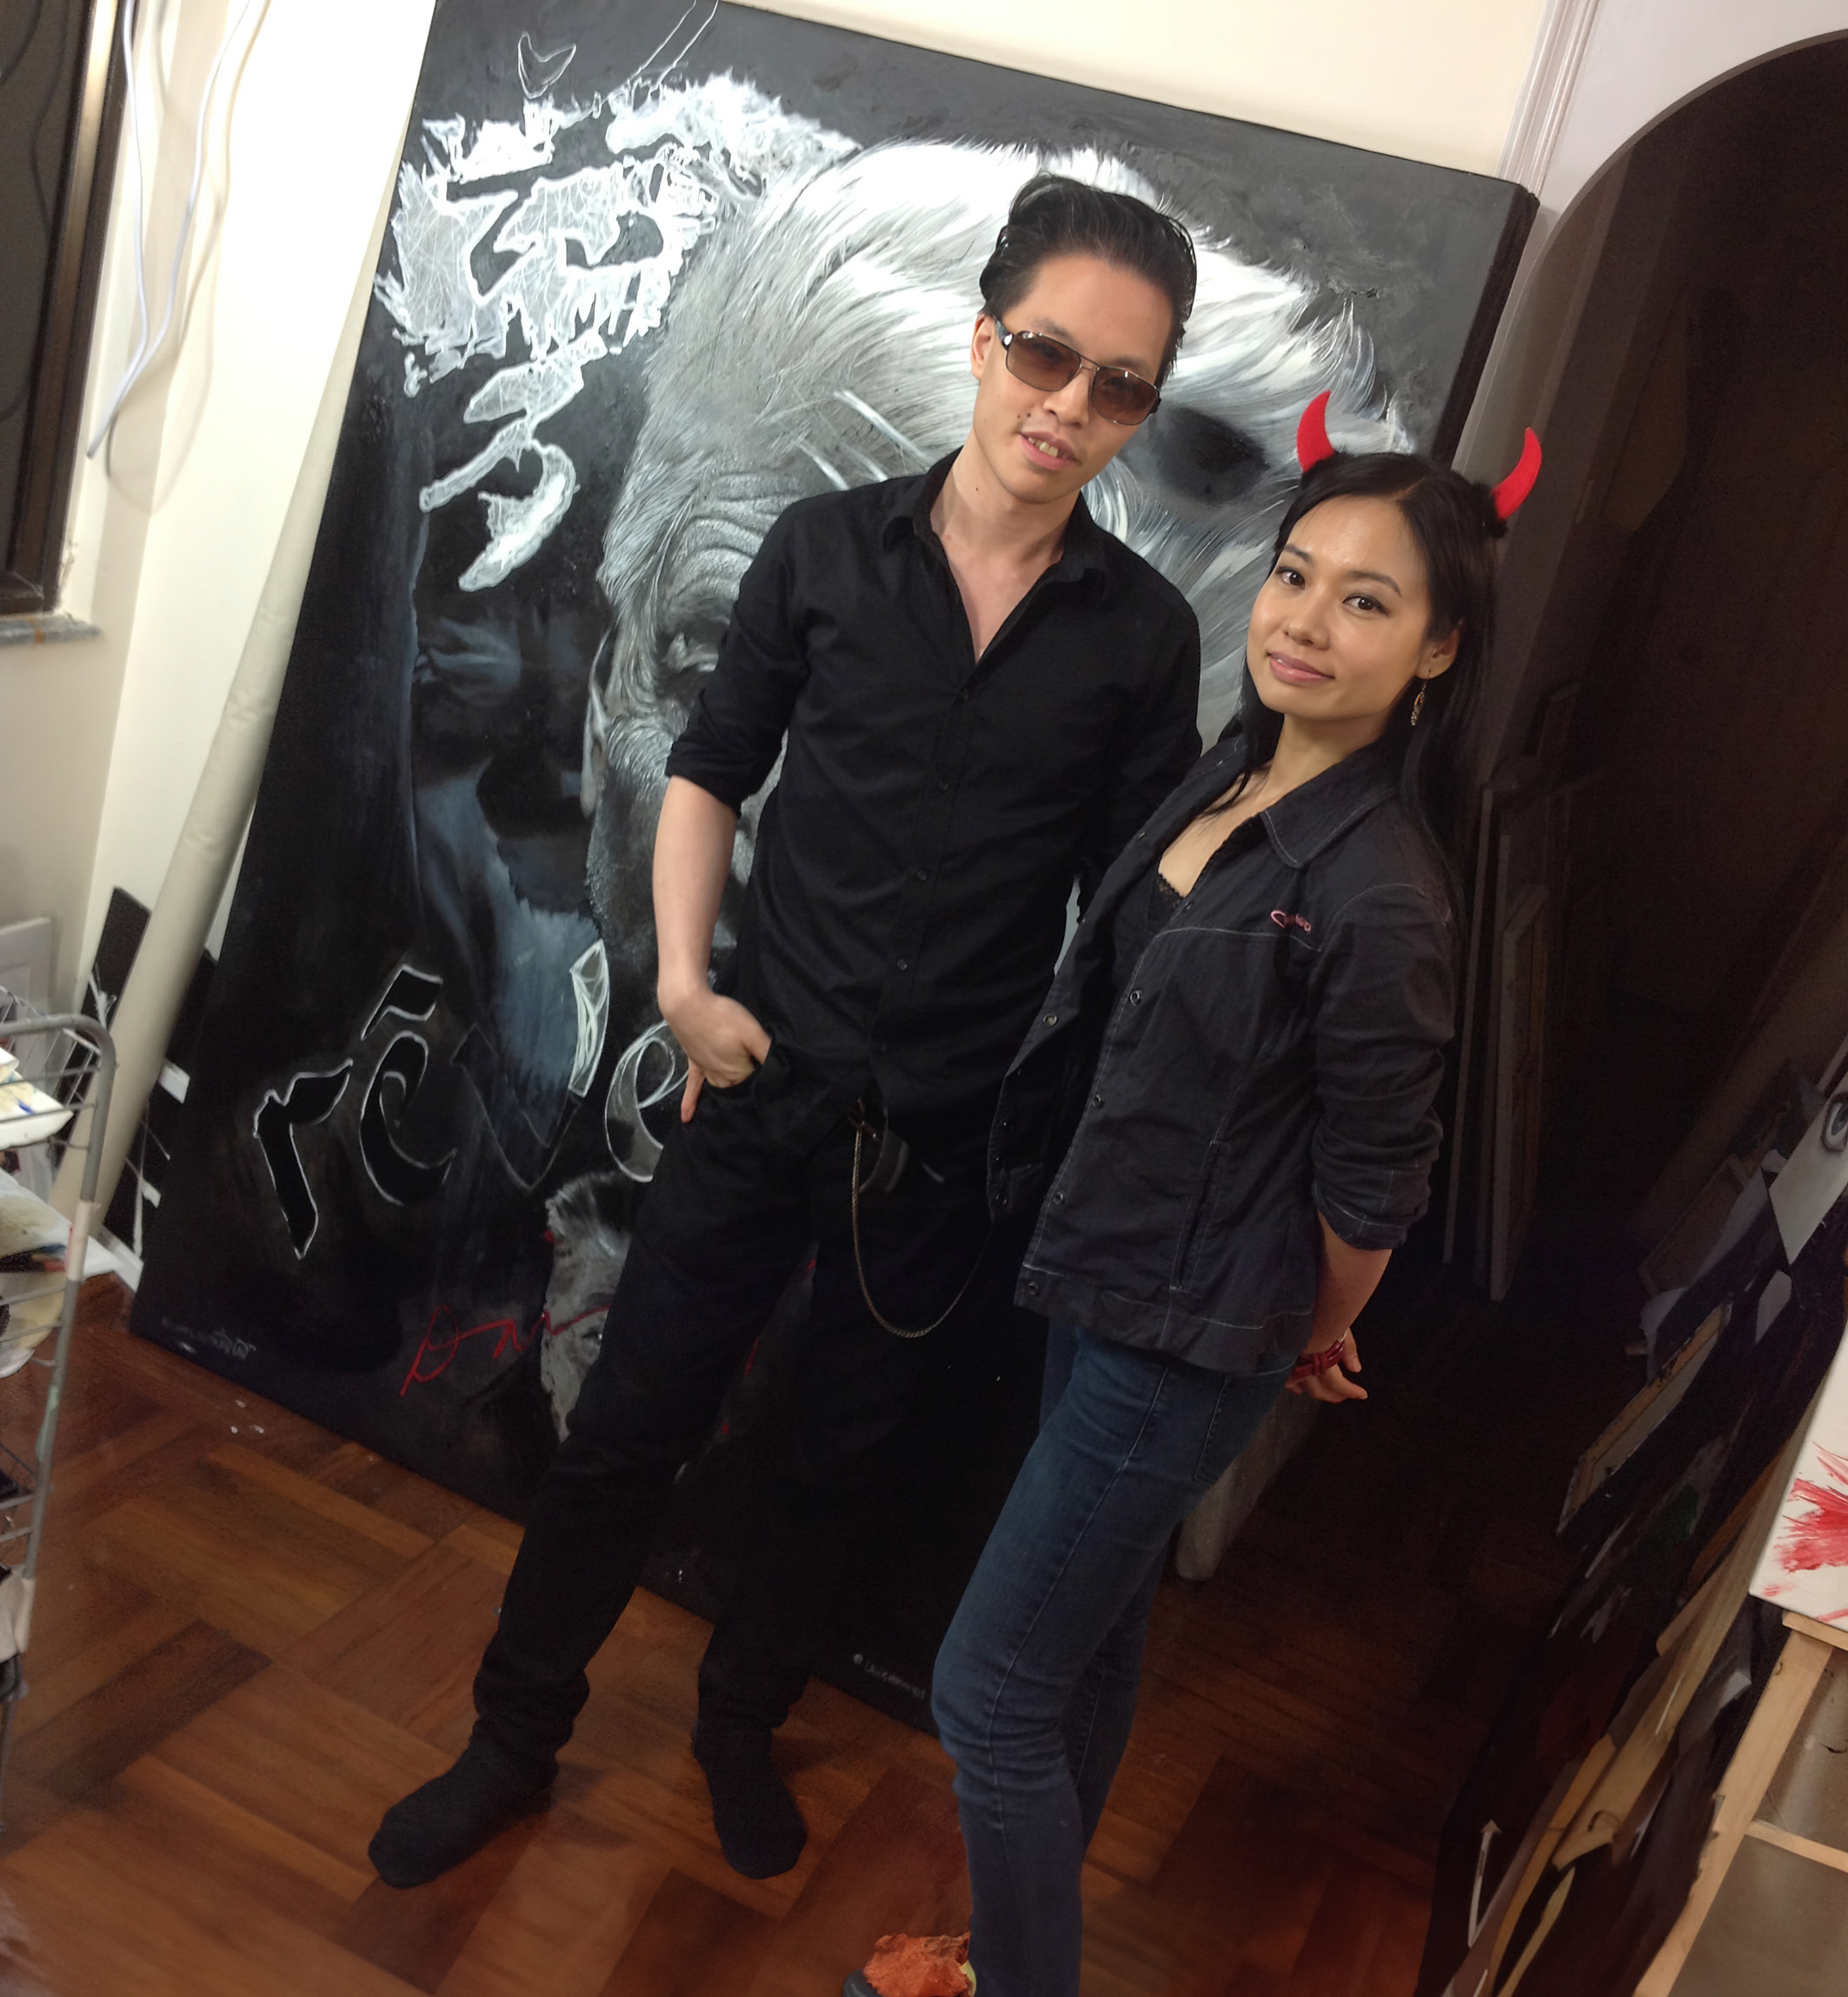 Michael Andrew Law and Belinda Leung